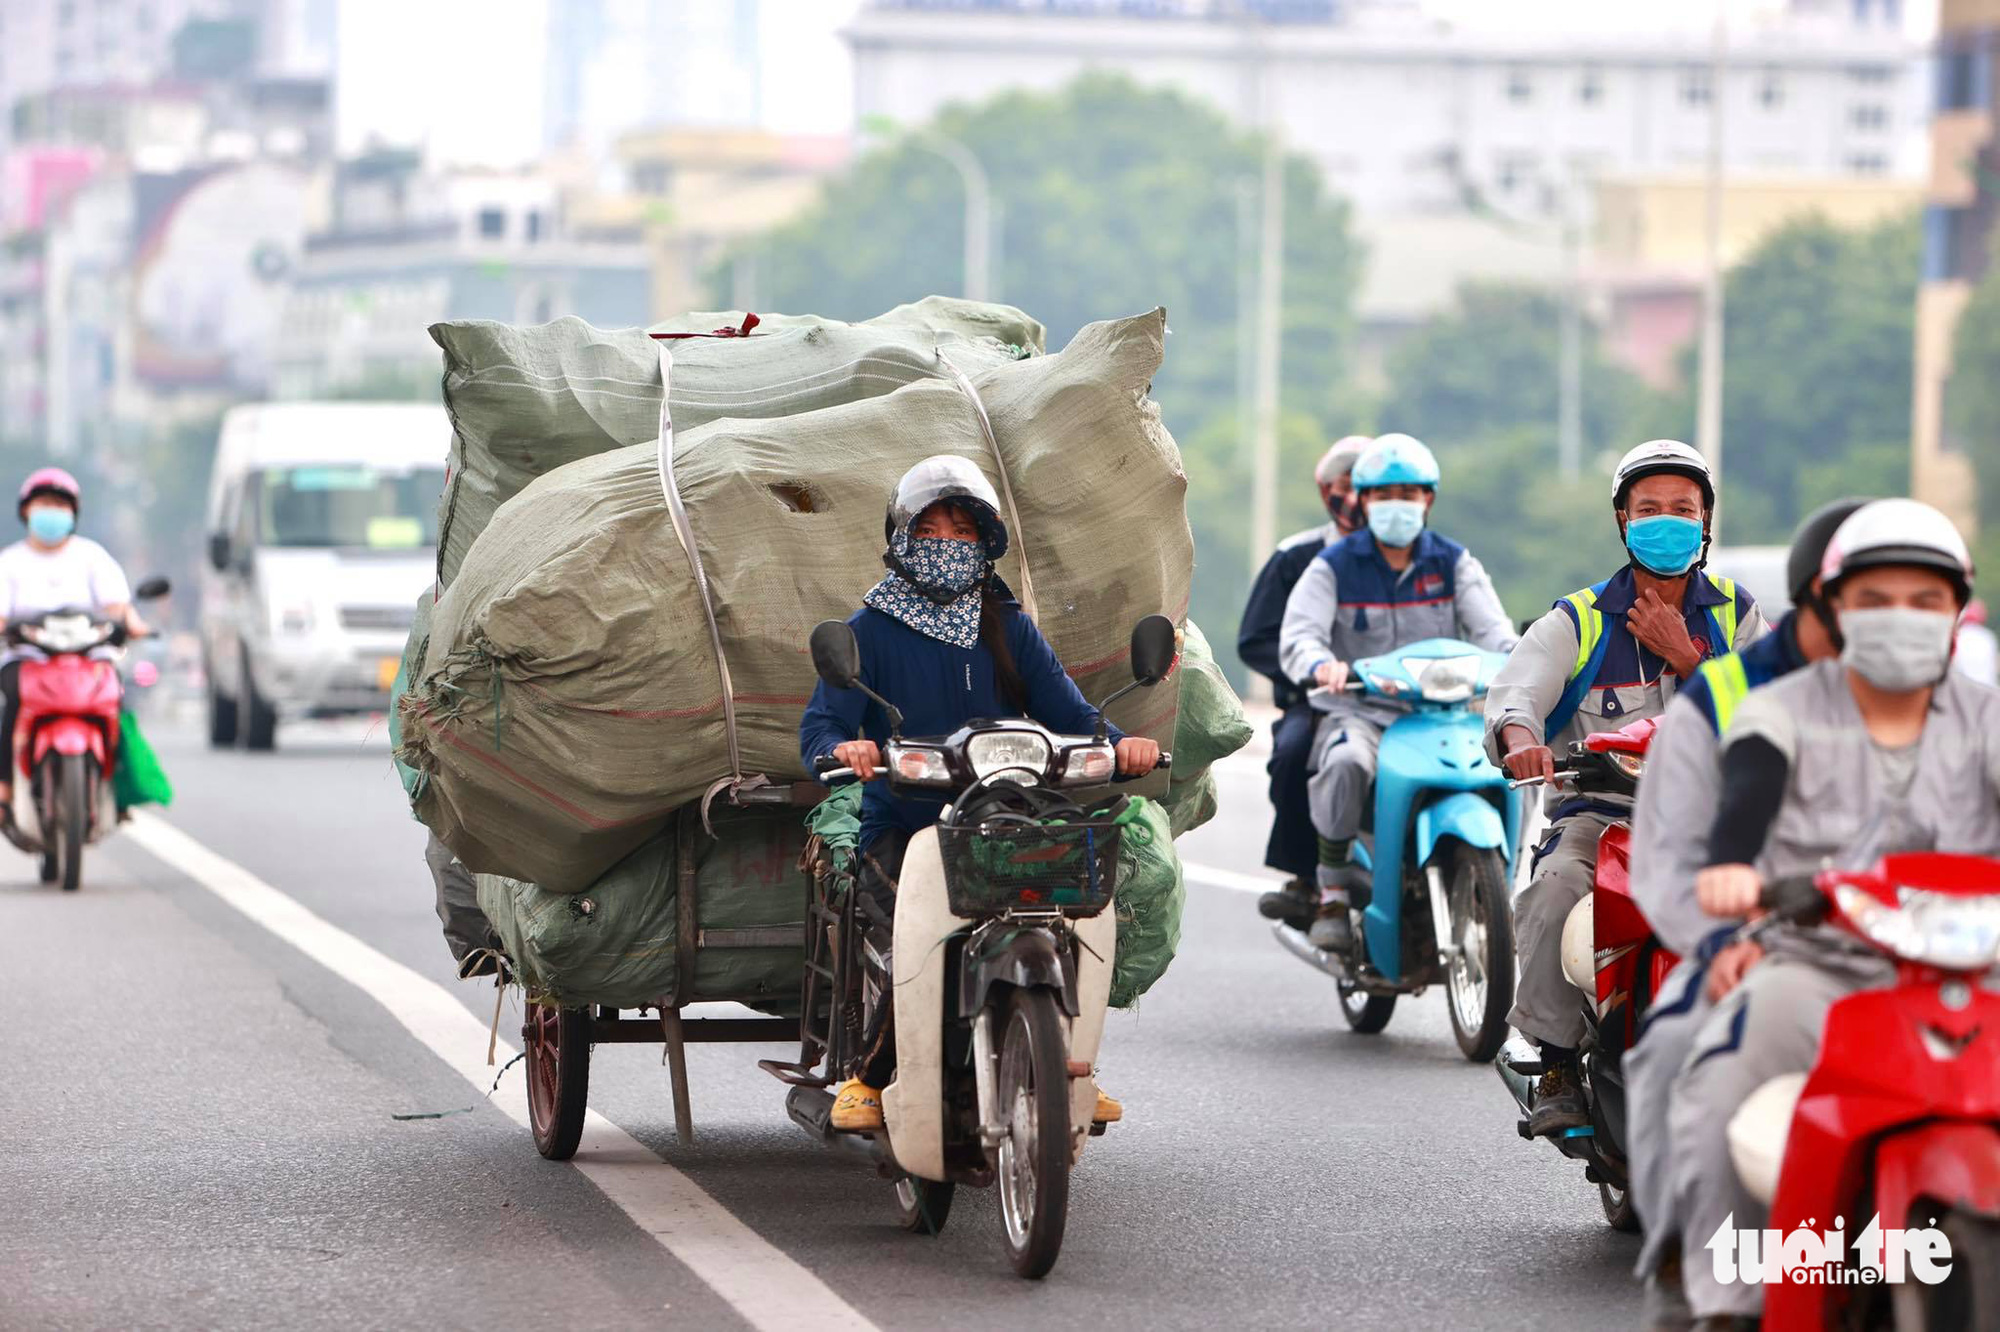 Vehicles travel on a street in Hanoi, September 21, 2021. Photo: Tuoi Tre